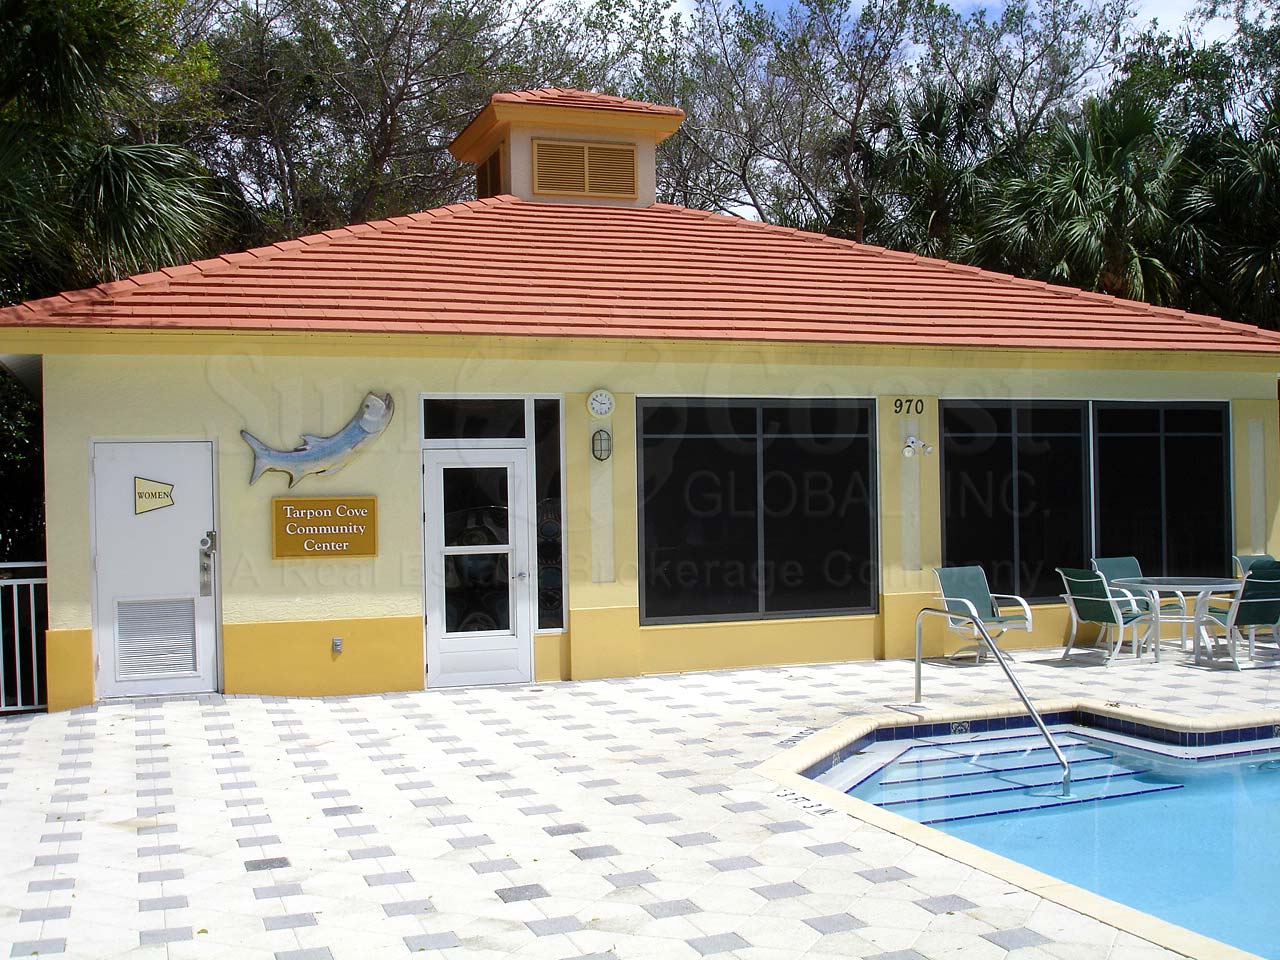 Tarpon Cove Community Pool and Community Center